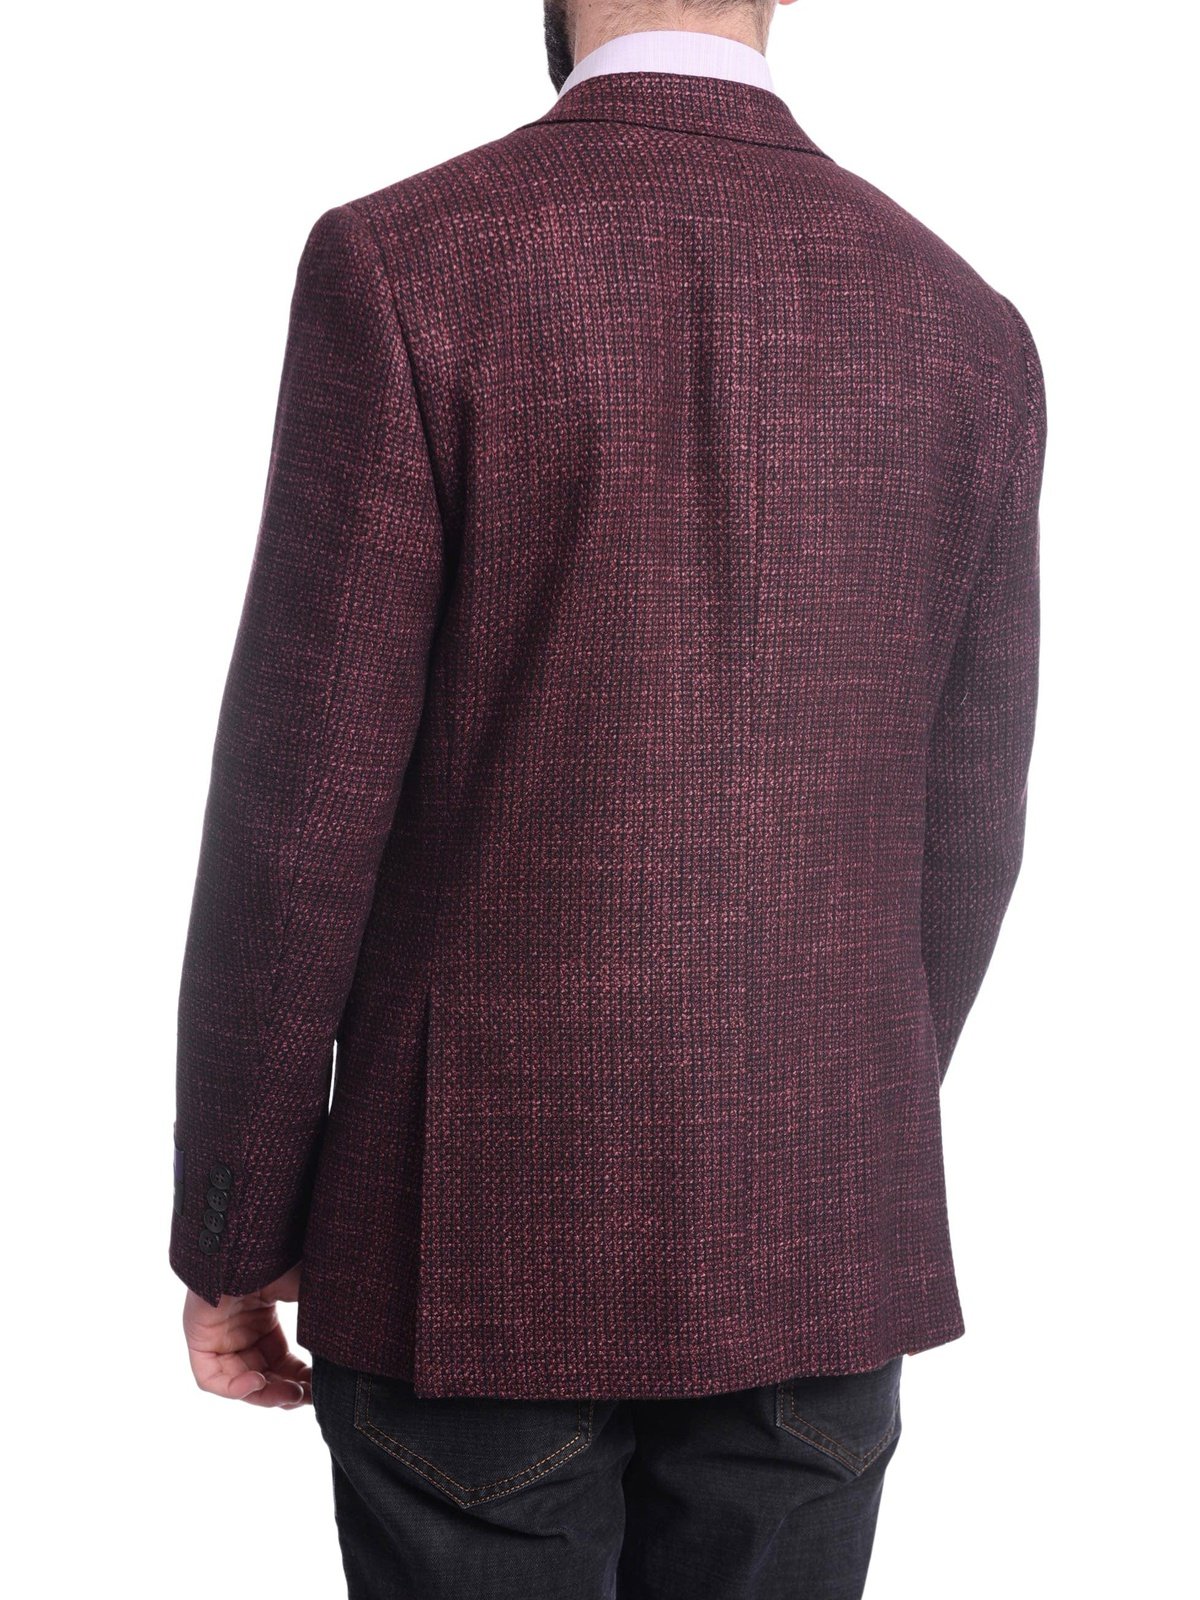 Napoli BLAZERS Napoli Slim Fit Burgundy Woven Tweed Two Button Half Canvassed Wool Silk Blazer